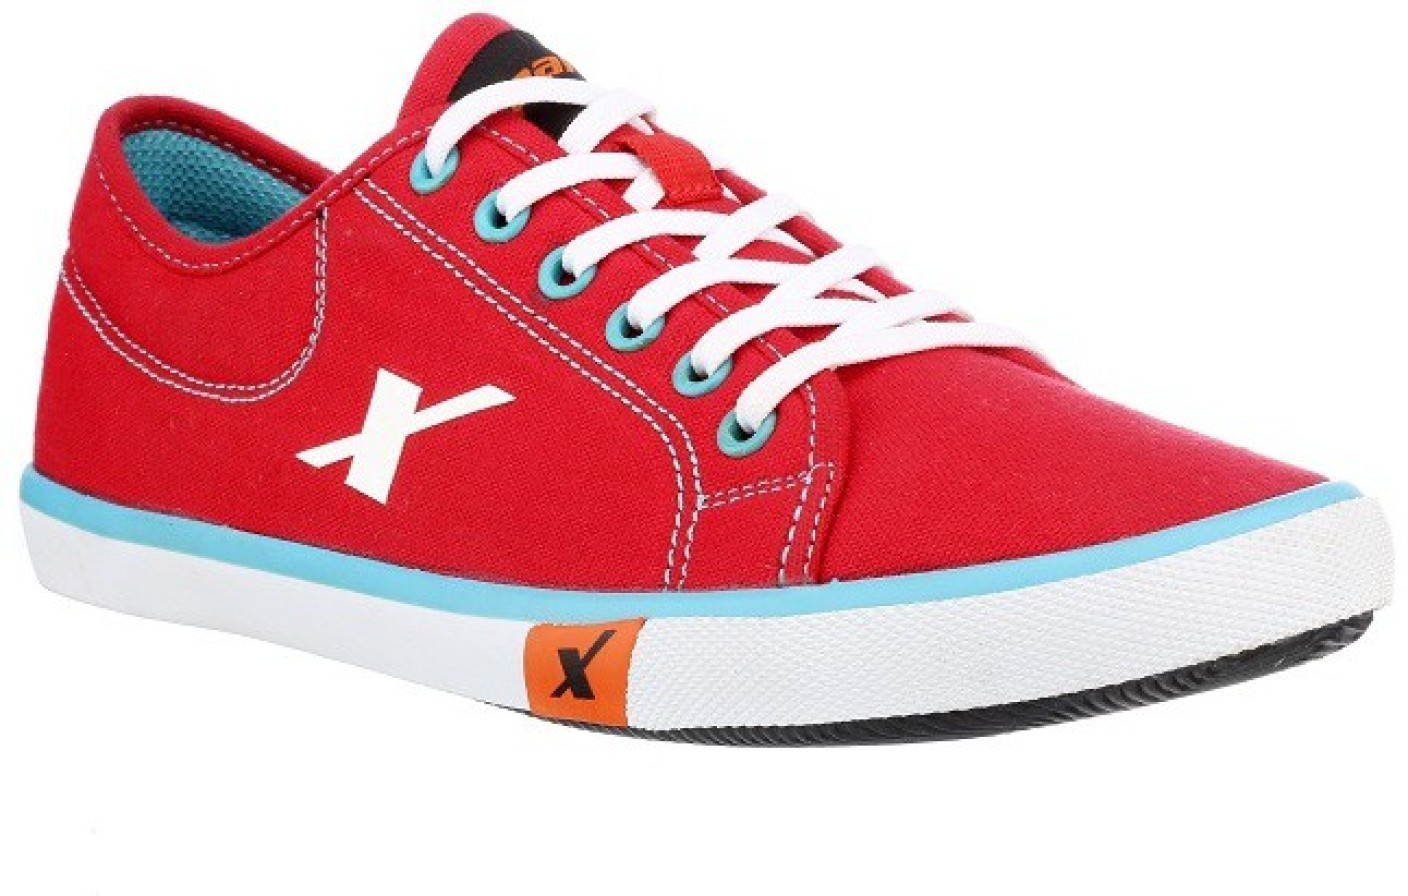 Sparx Canvas Shoes For Men - Buy RedSkyBlue Color Sparx Canvas Shoes ...